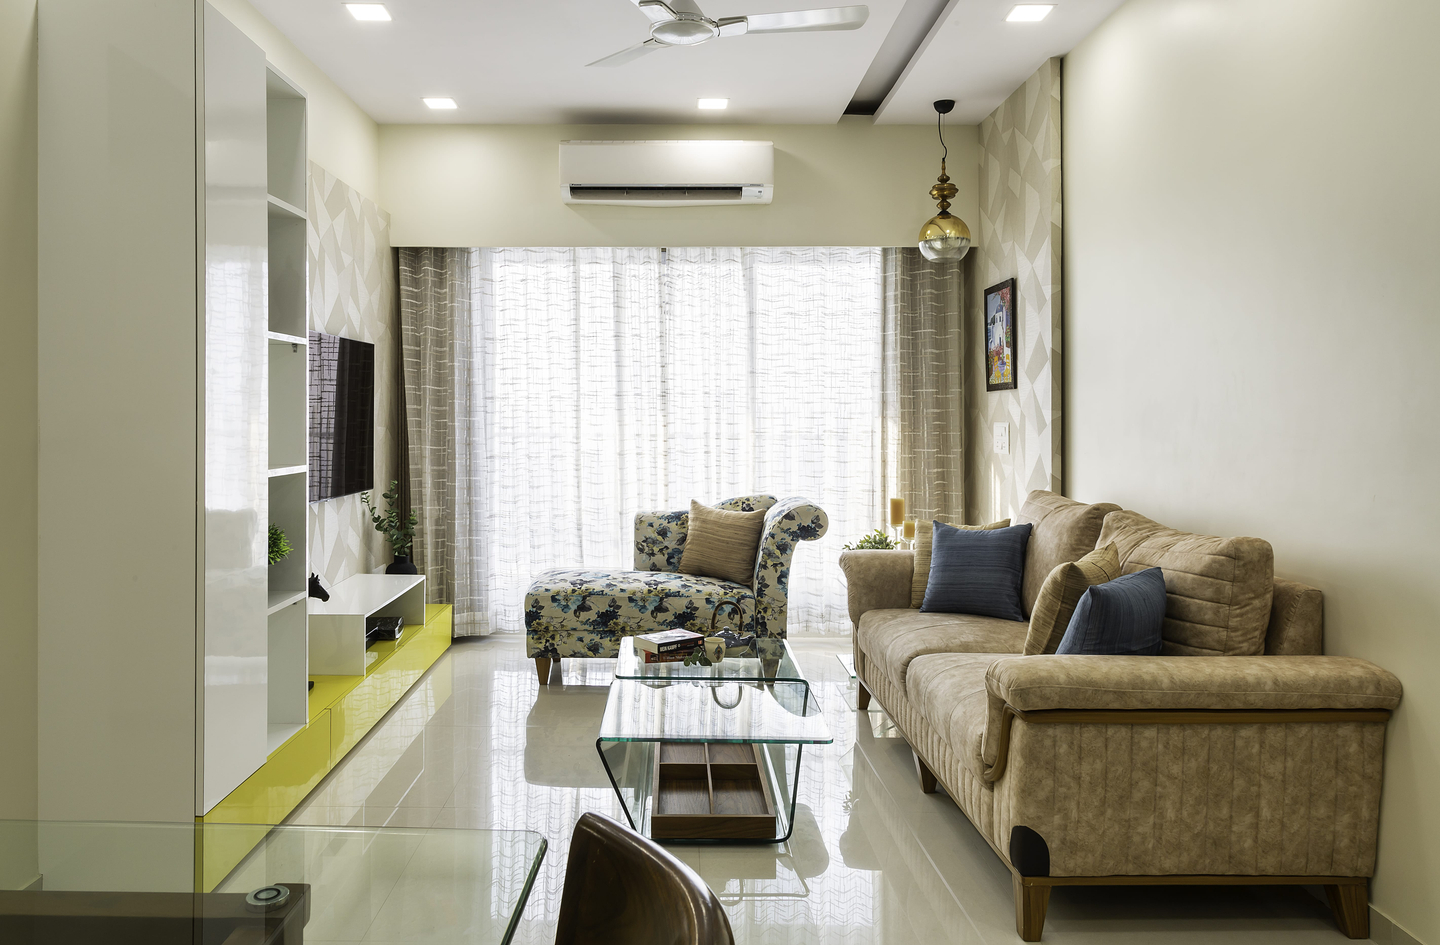 2-BHK Modern Home Design In Mumbai - Livspace